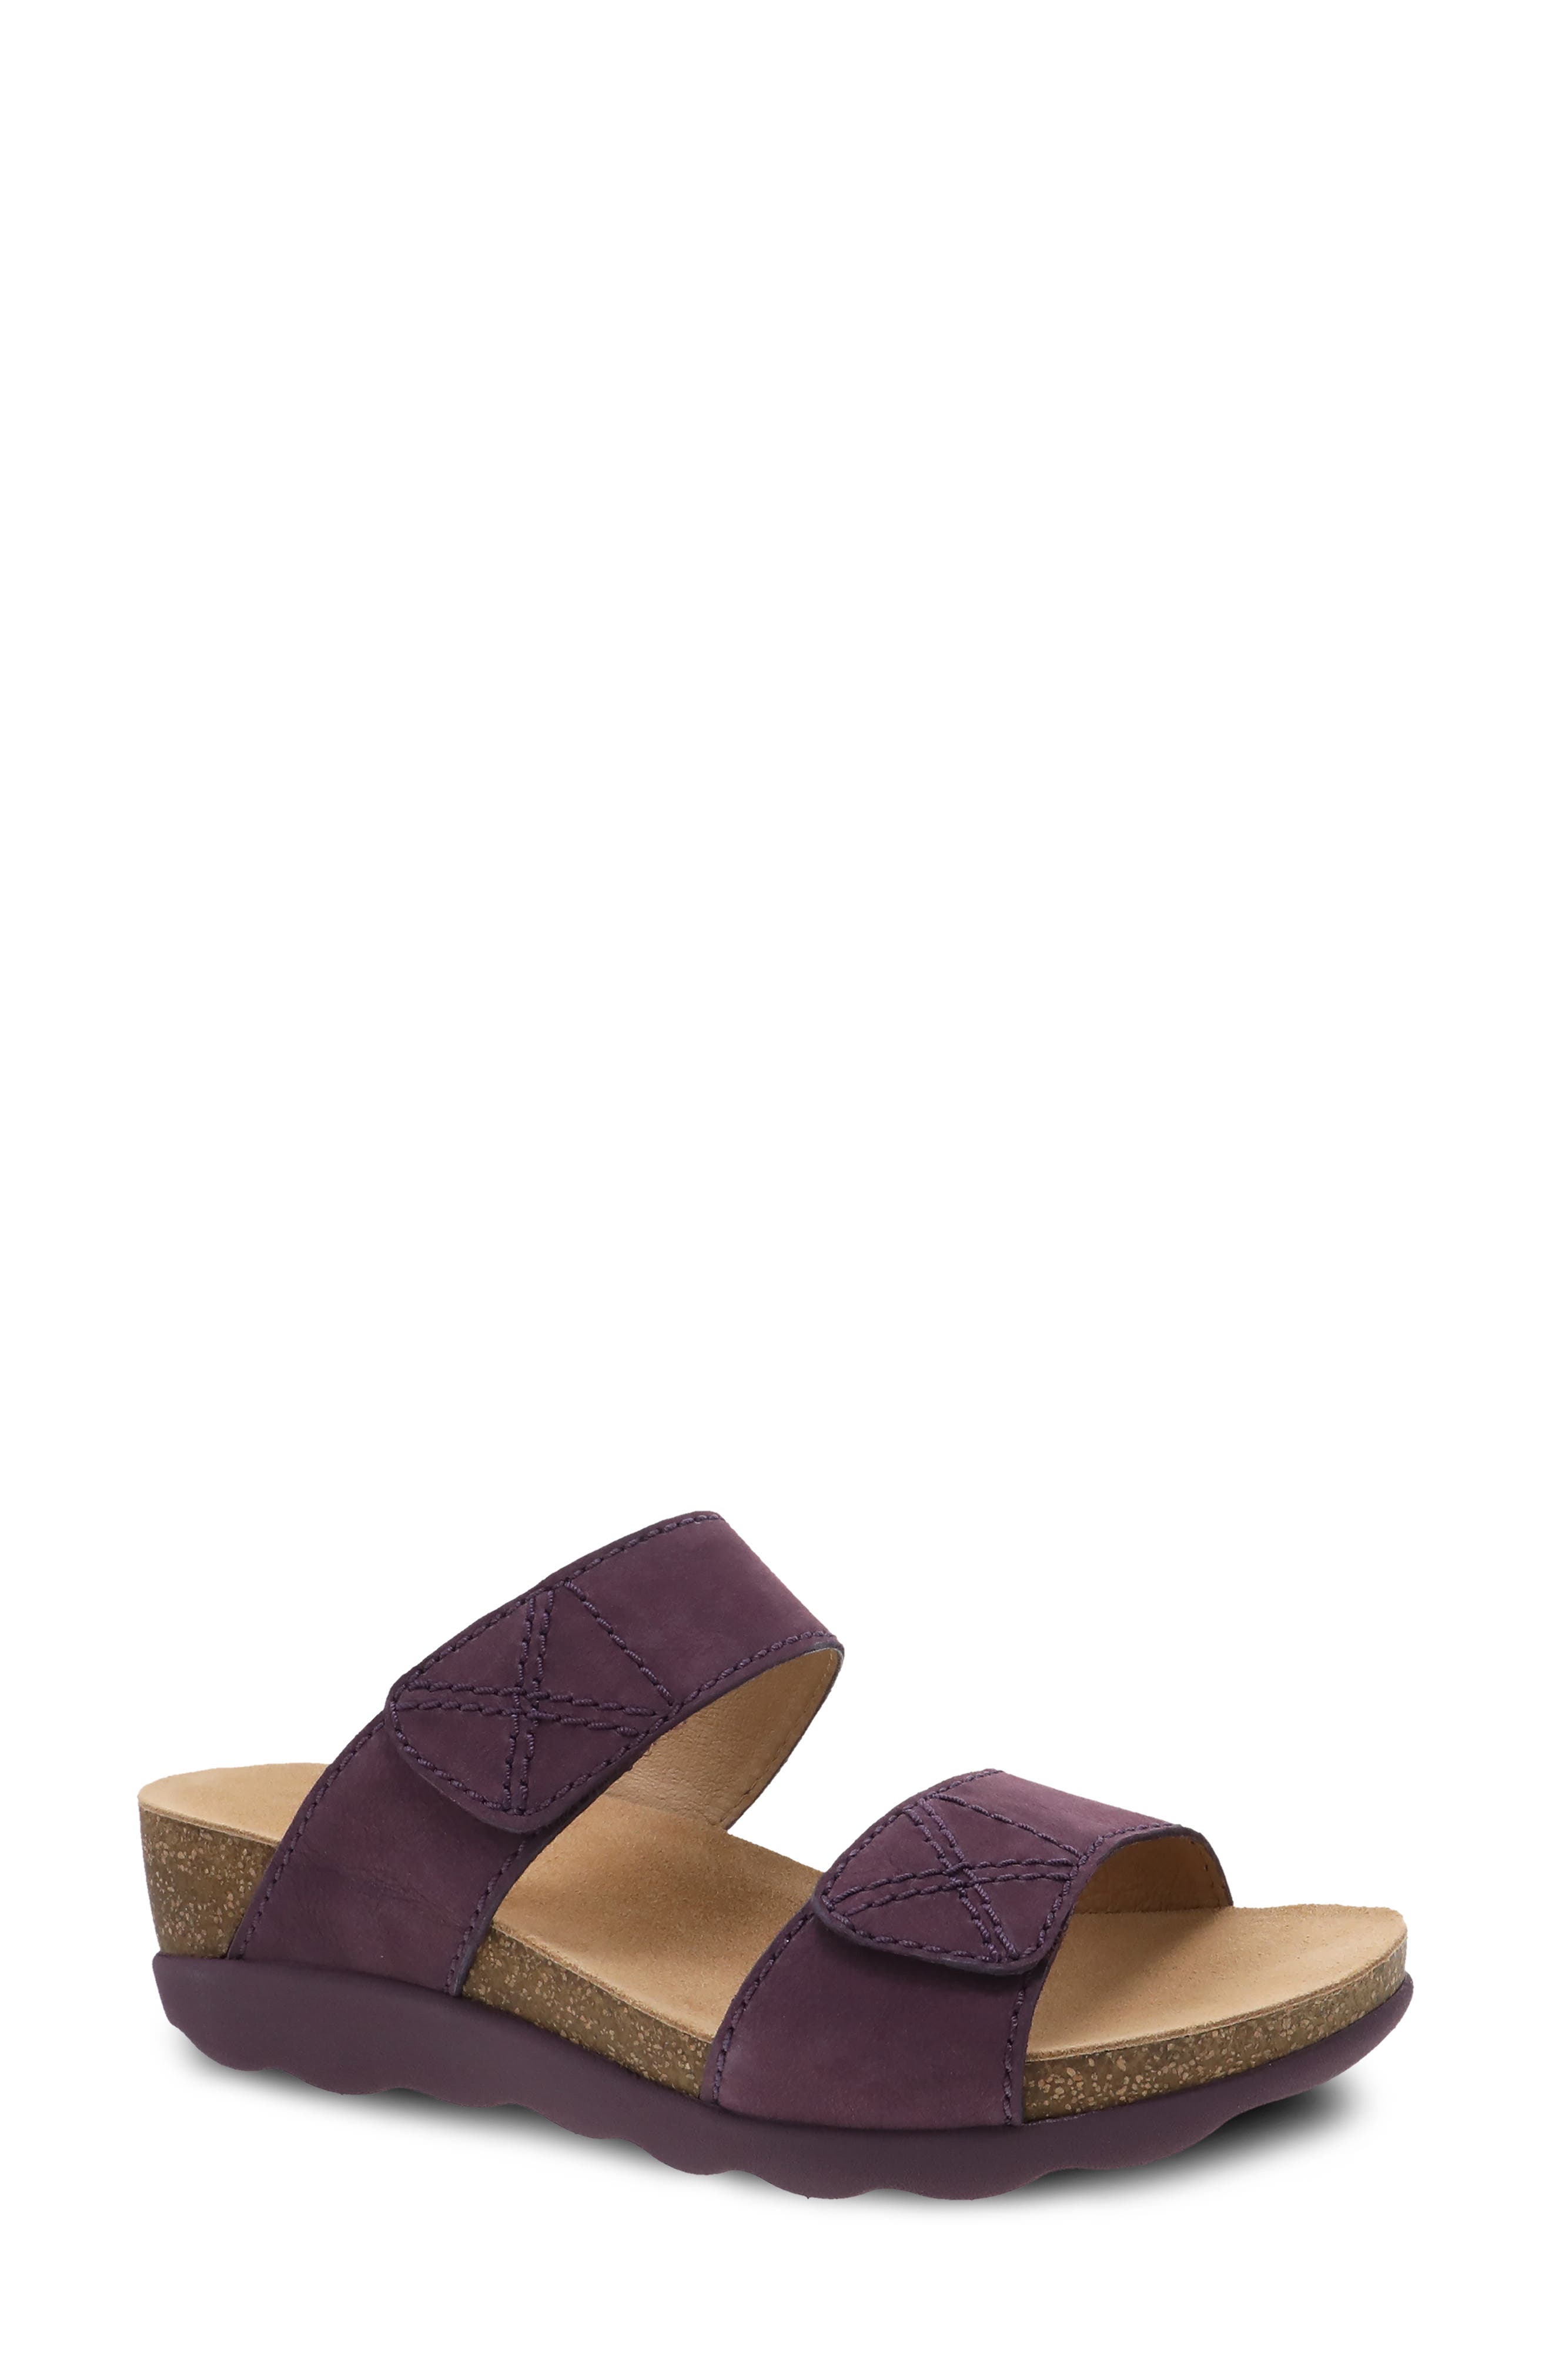 Maddy Wedge Slide Sandal in Purple Milled Nubuck at Nordstrom Nordstrom Women Shoes High Heels Wedges Wedge Sandals 